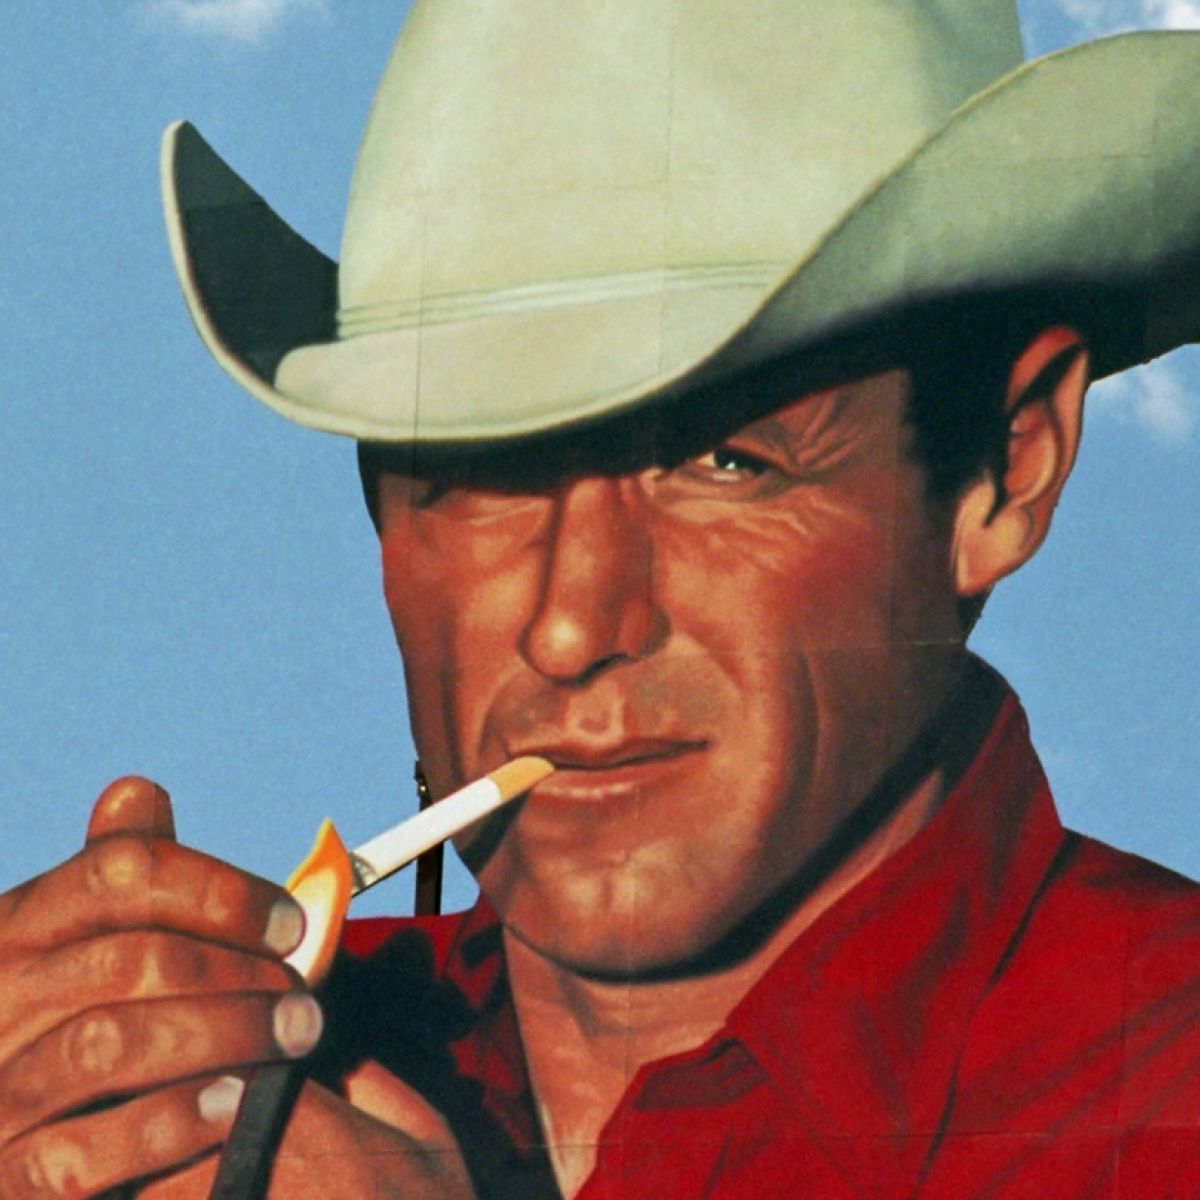 Marlboro Man, the macho cigarette-smoking cowboy, has a surprising new  message